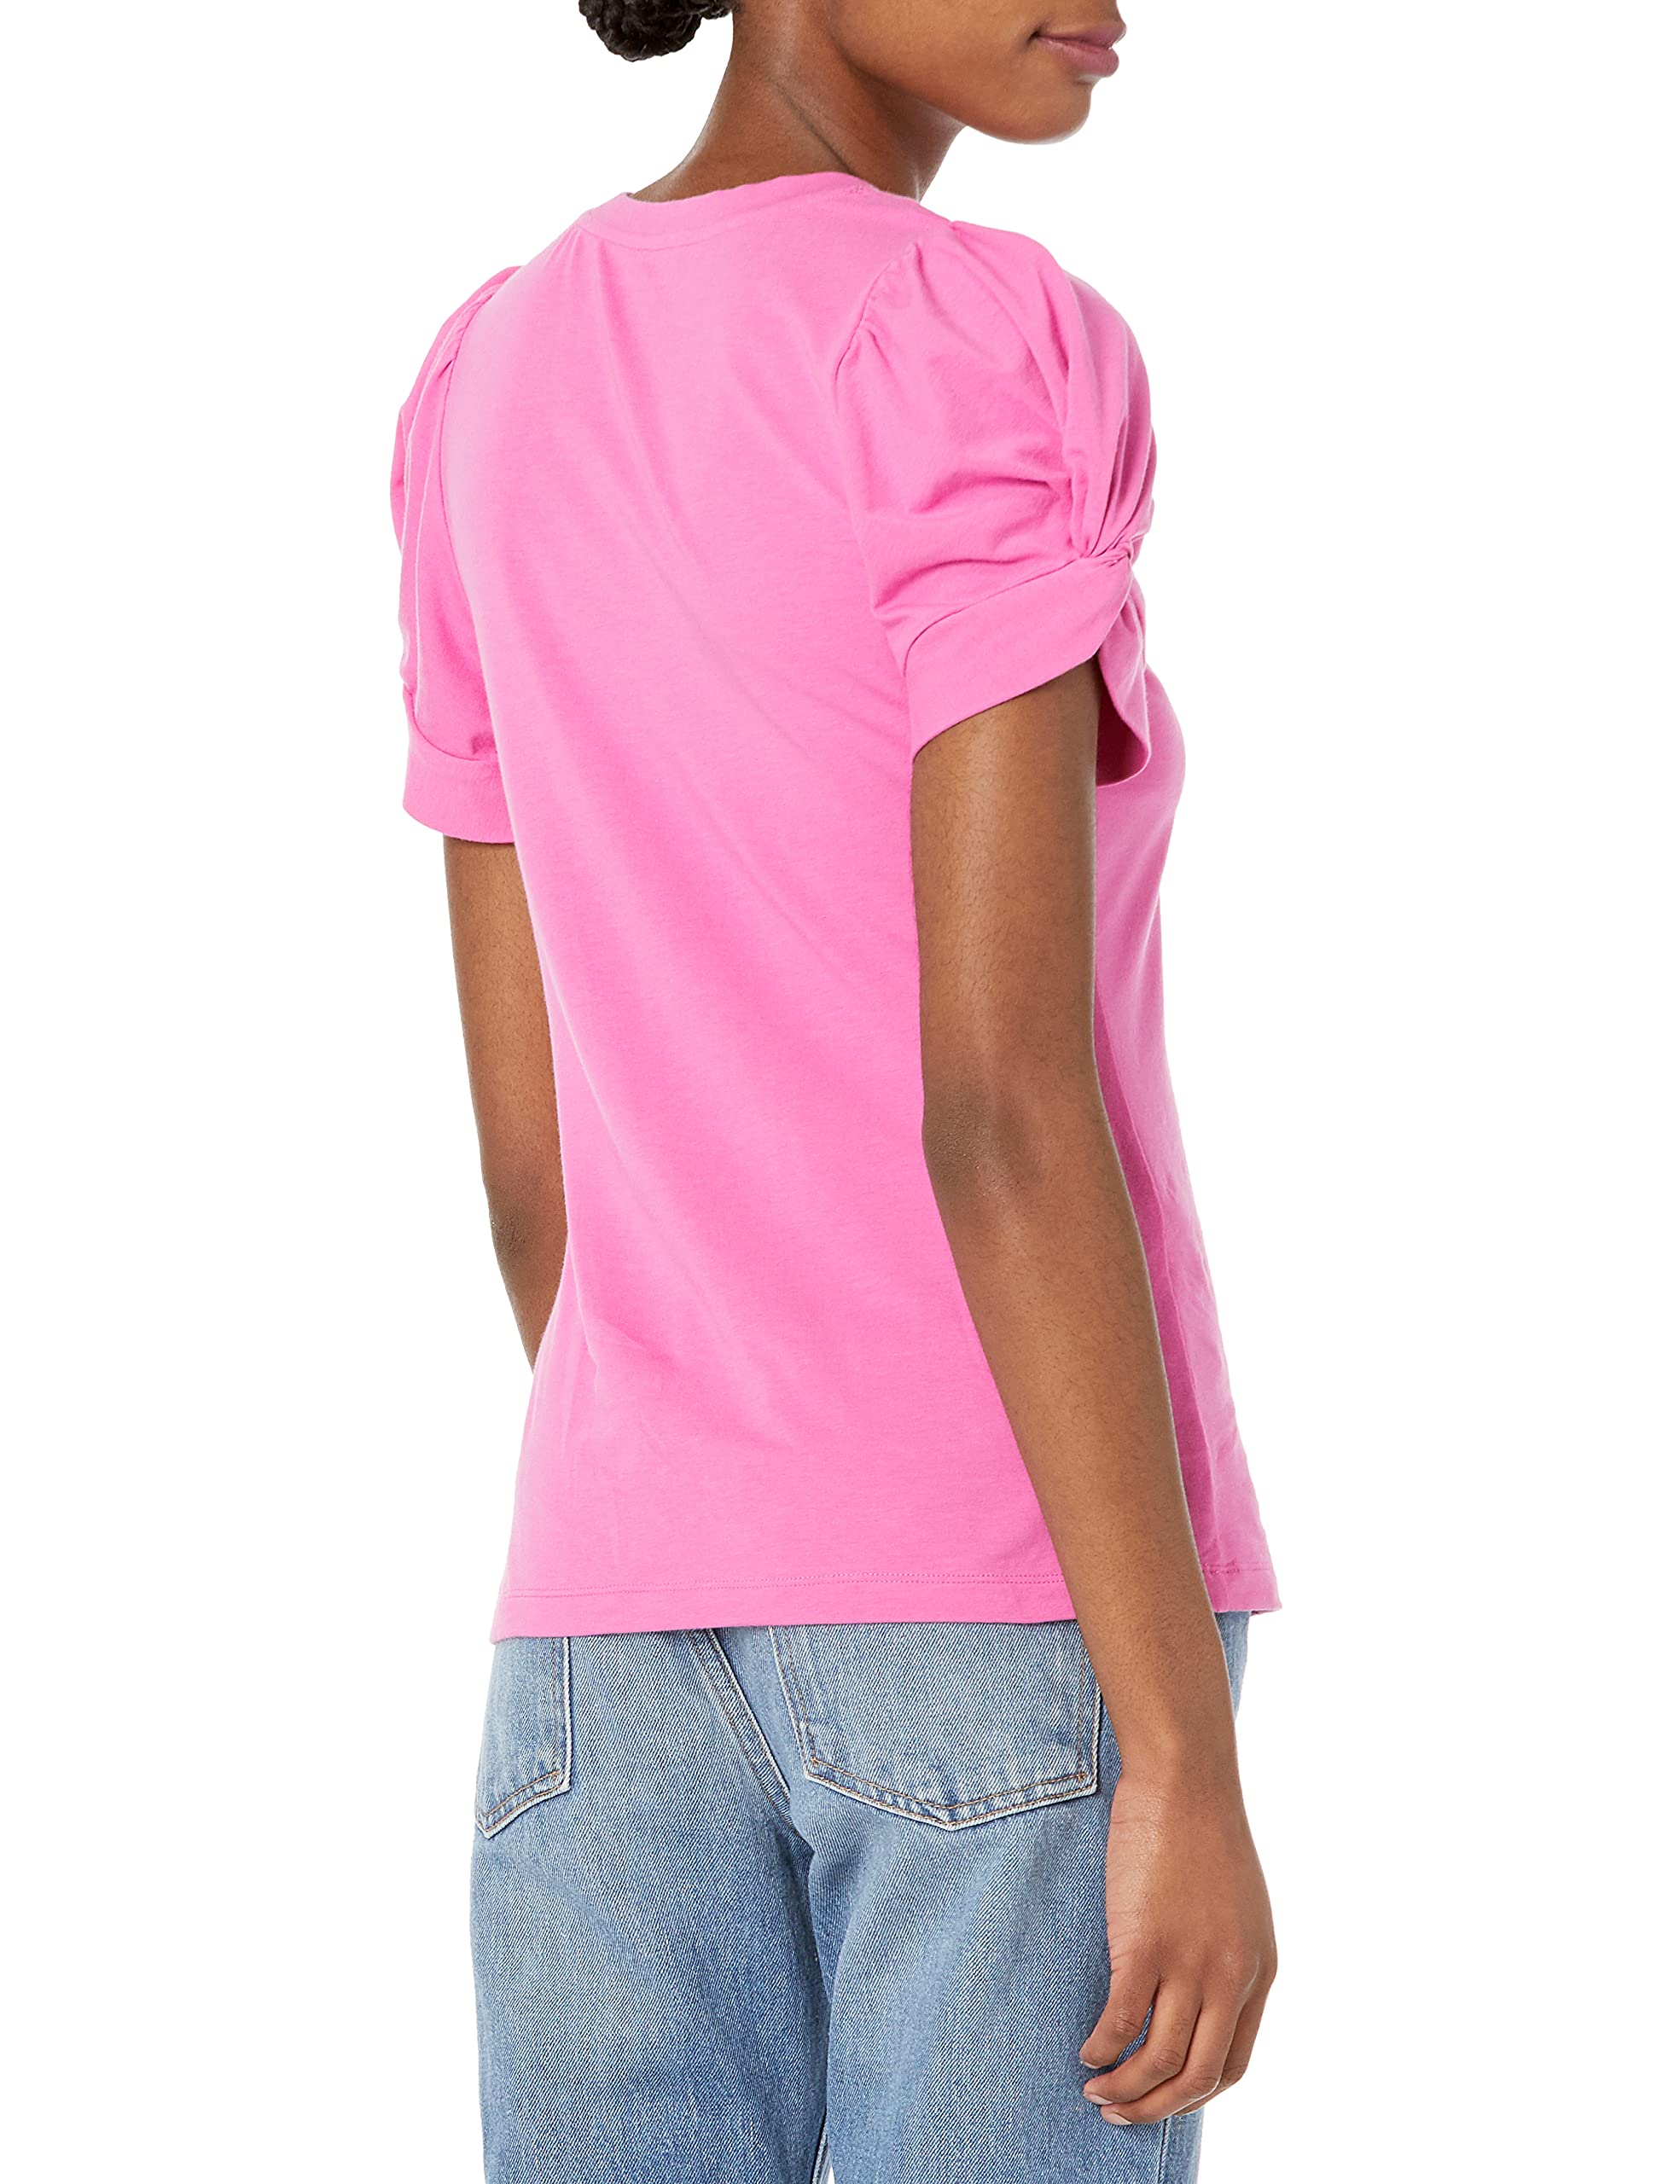 Amazon Essentials Women's Classic-Fit Twist Sleeve Crewneck T-Shirt